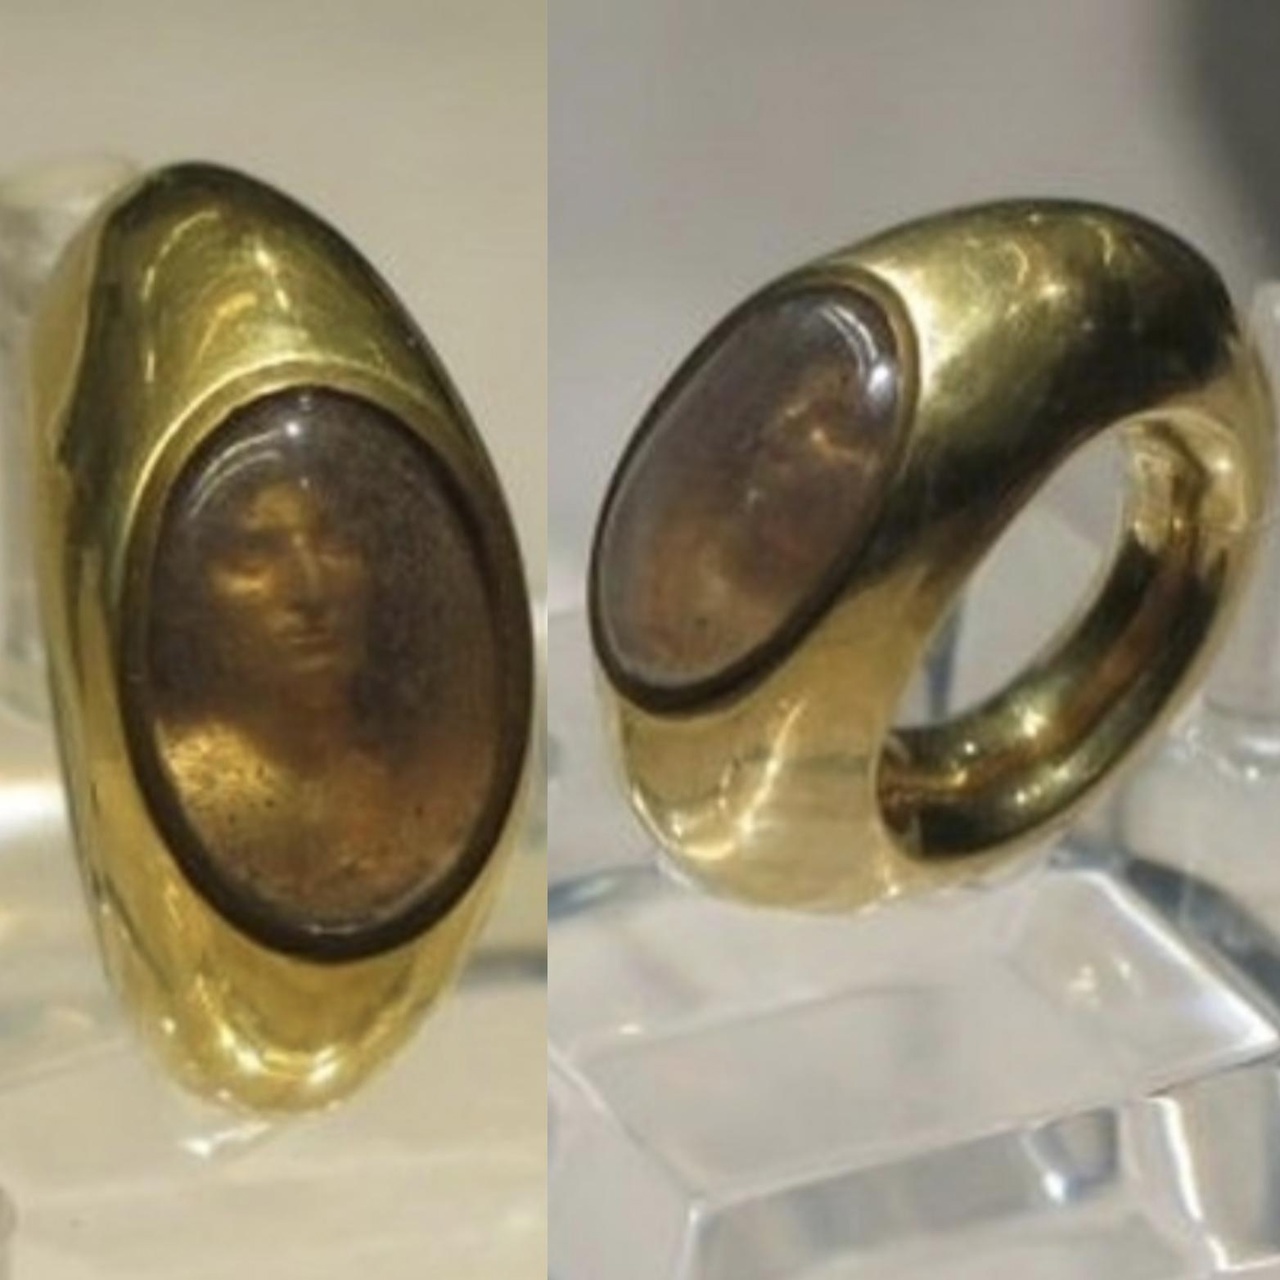 Кольцо Тита Карвилиуса Гемелло. Кварц и золото, I век нашей эры. Найдено в некрополе Гроттаферрата недалеко от Рима.